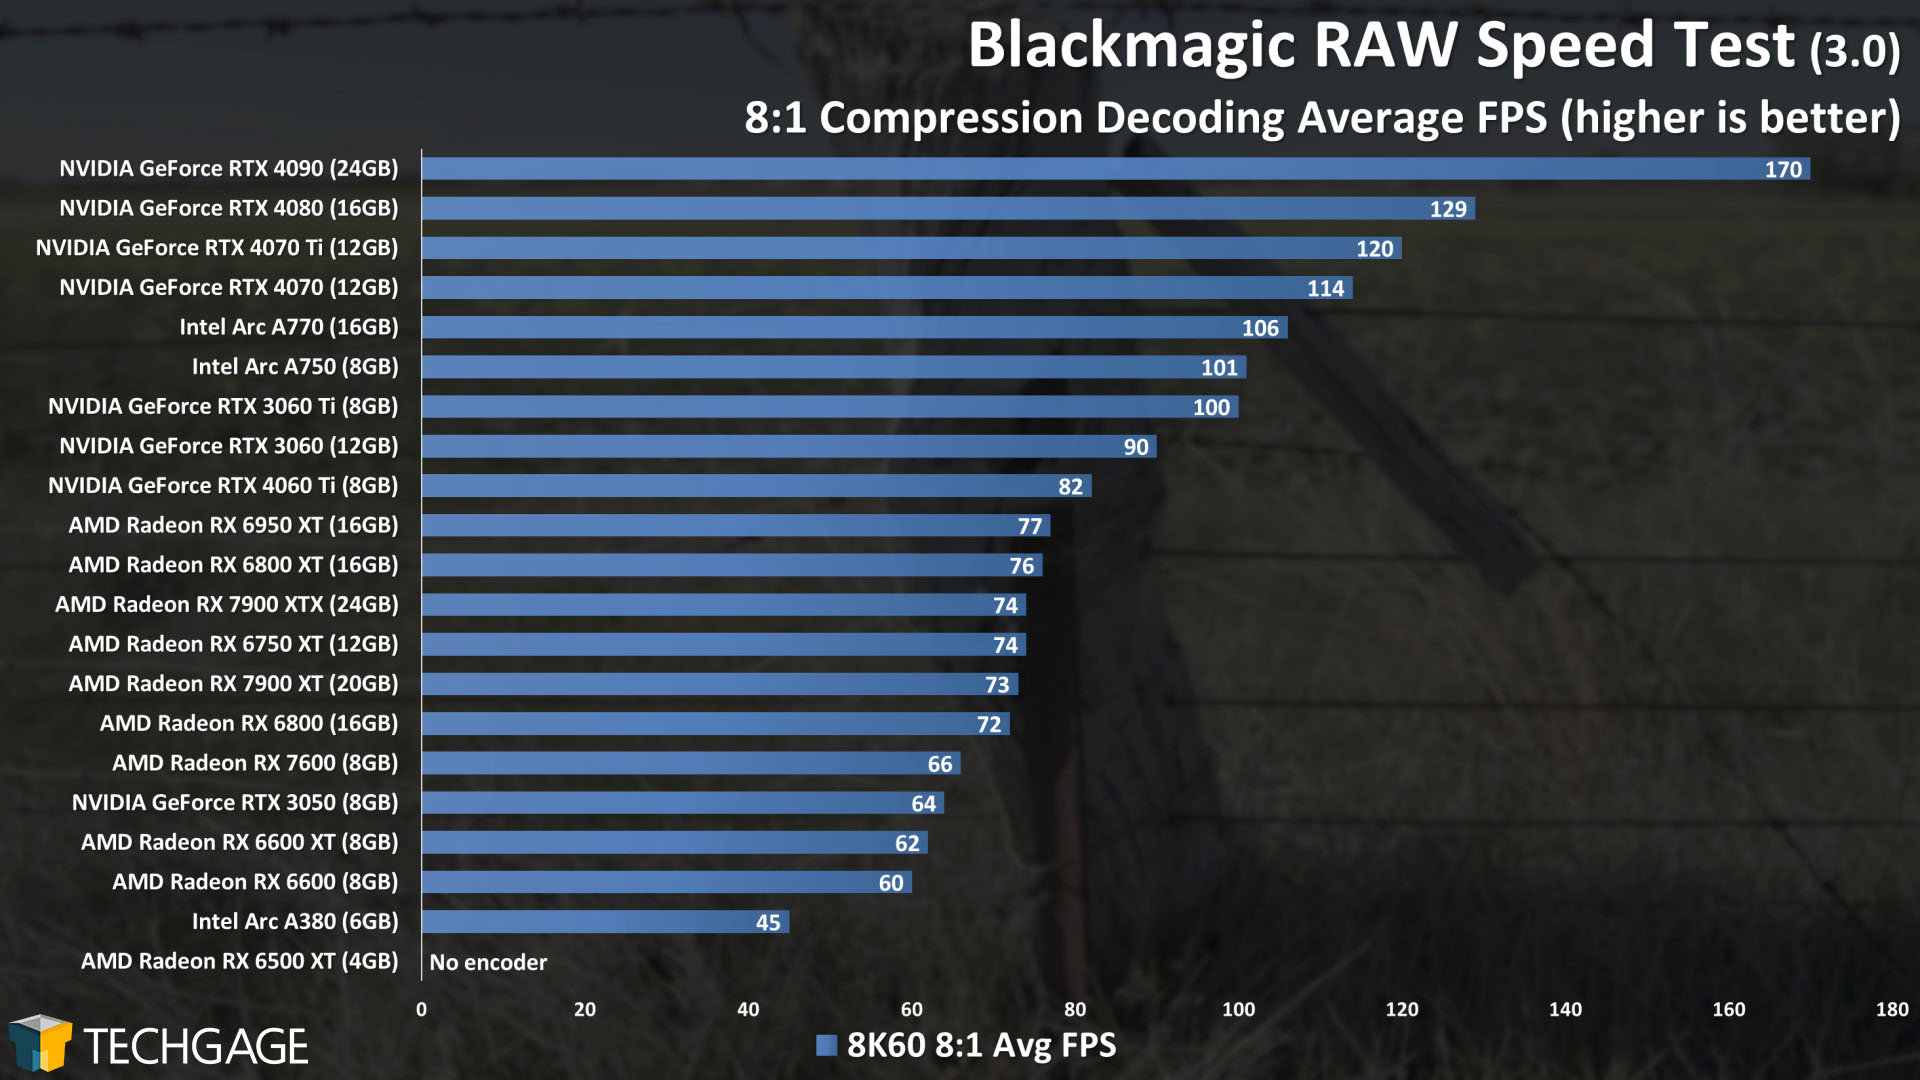 BRAW - GPU Decoding Framerate (8-1 Compression)